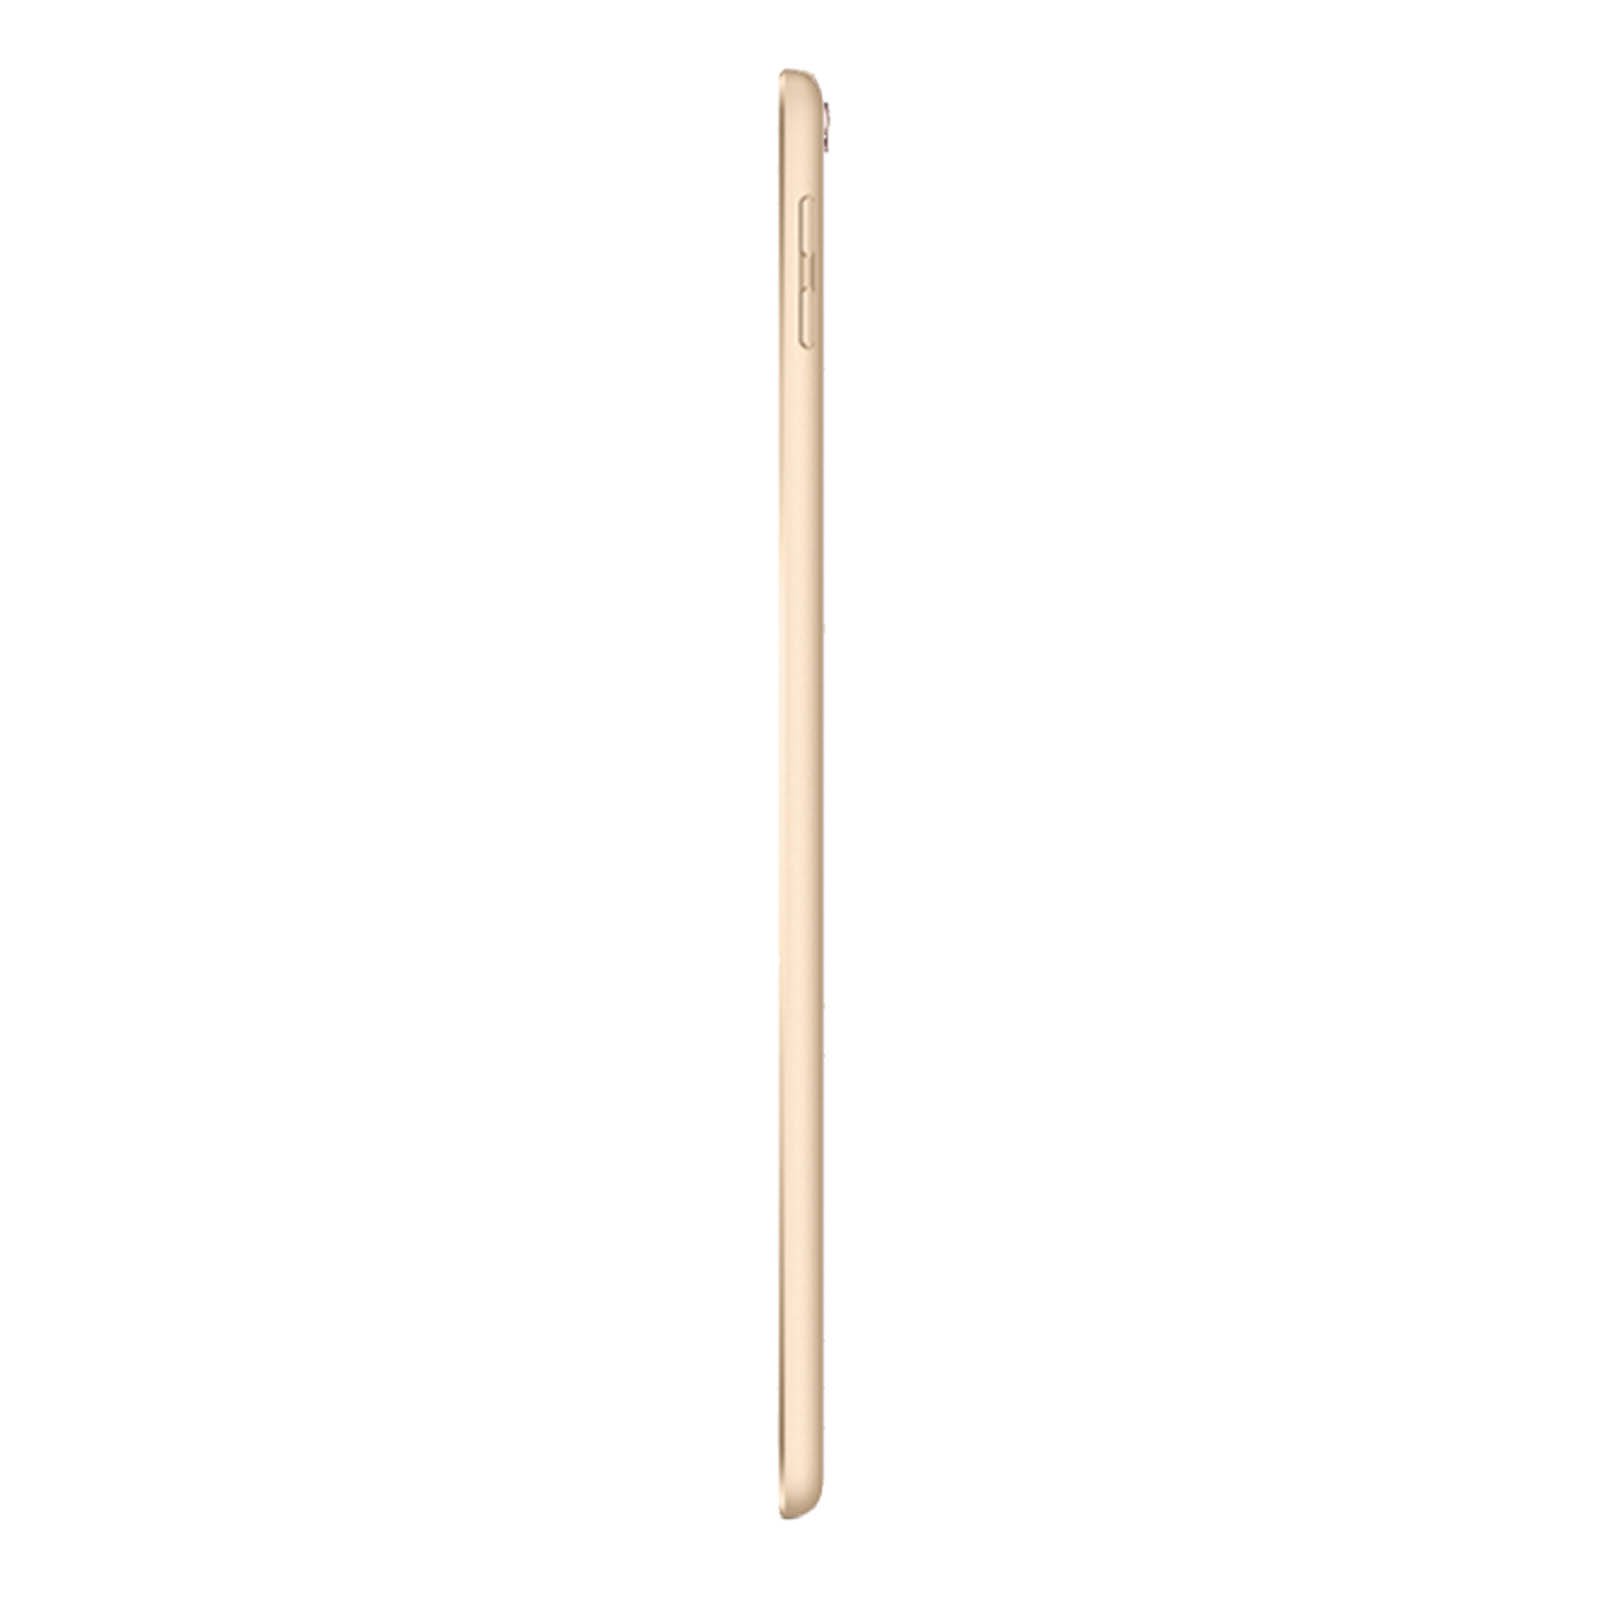 iPad Pro 10.5 Inch 256GB Gold Very Good - Unlocked